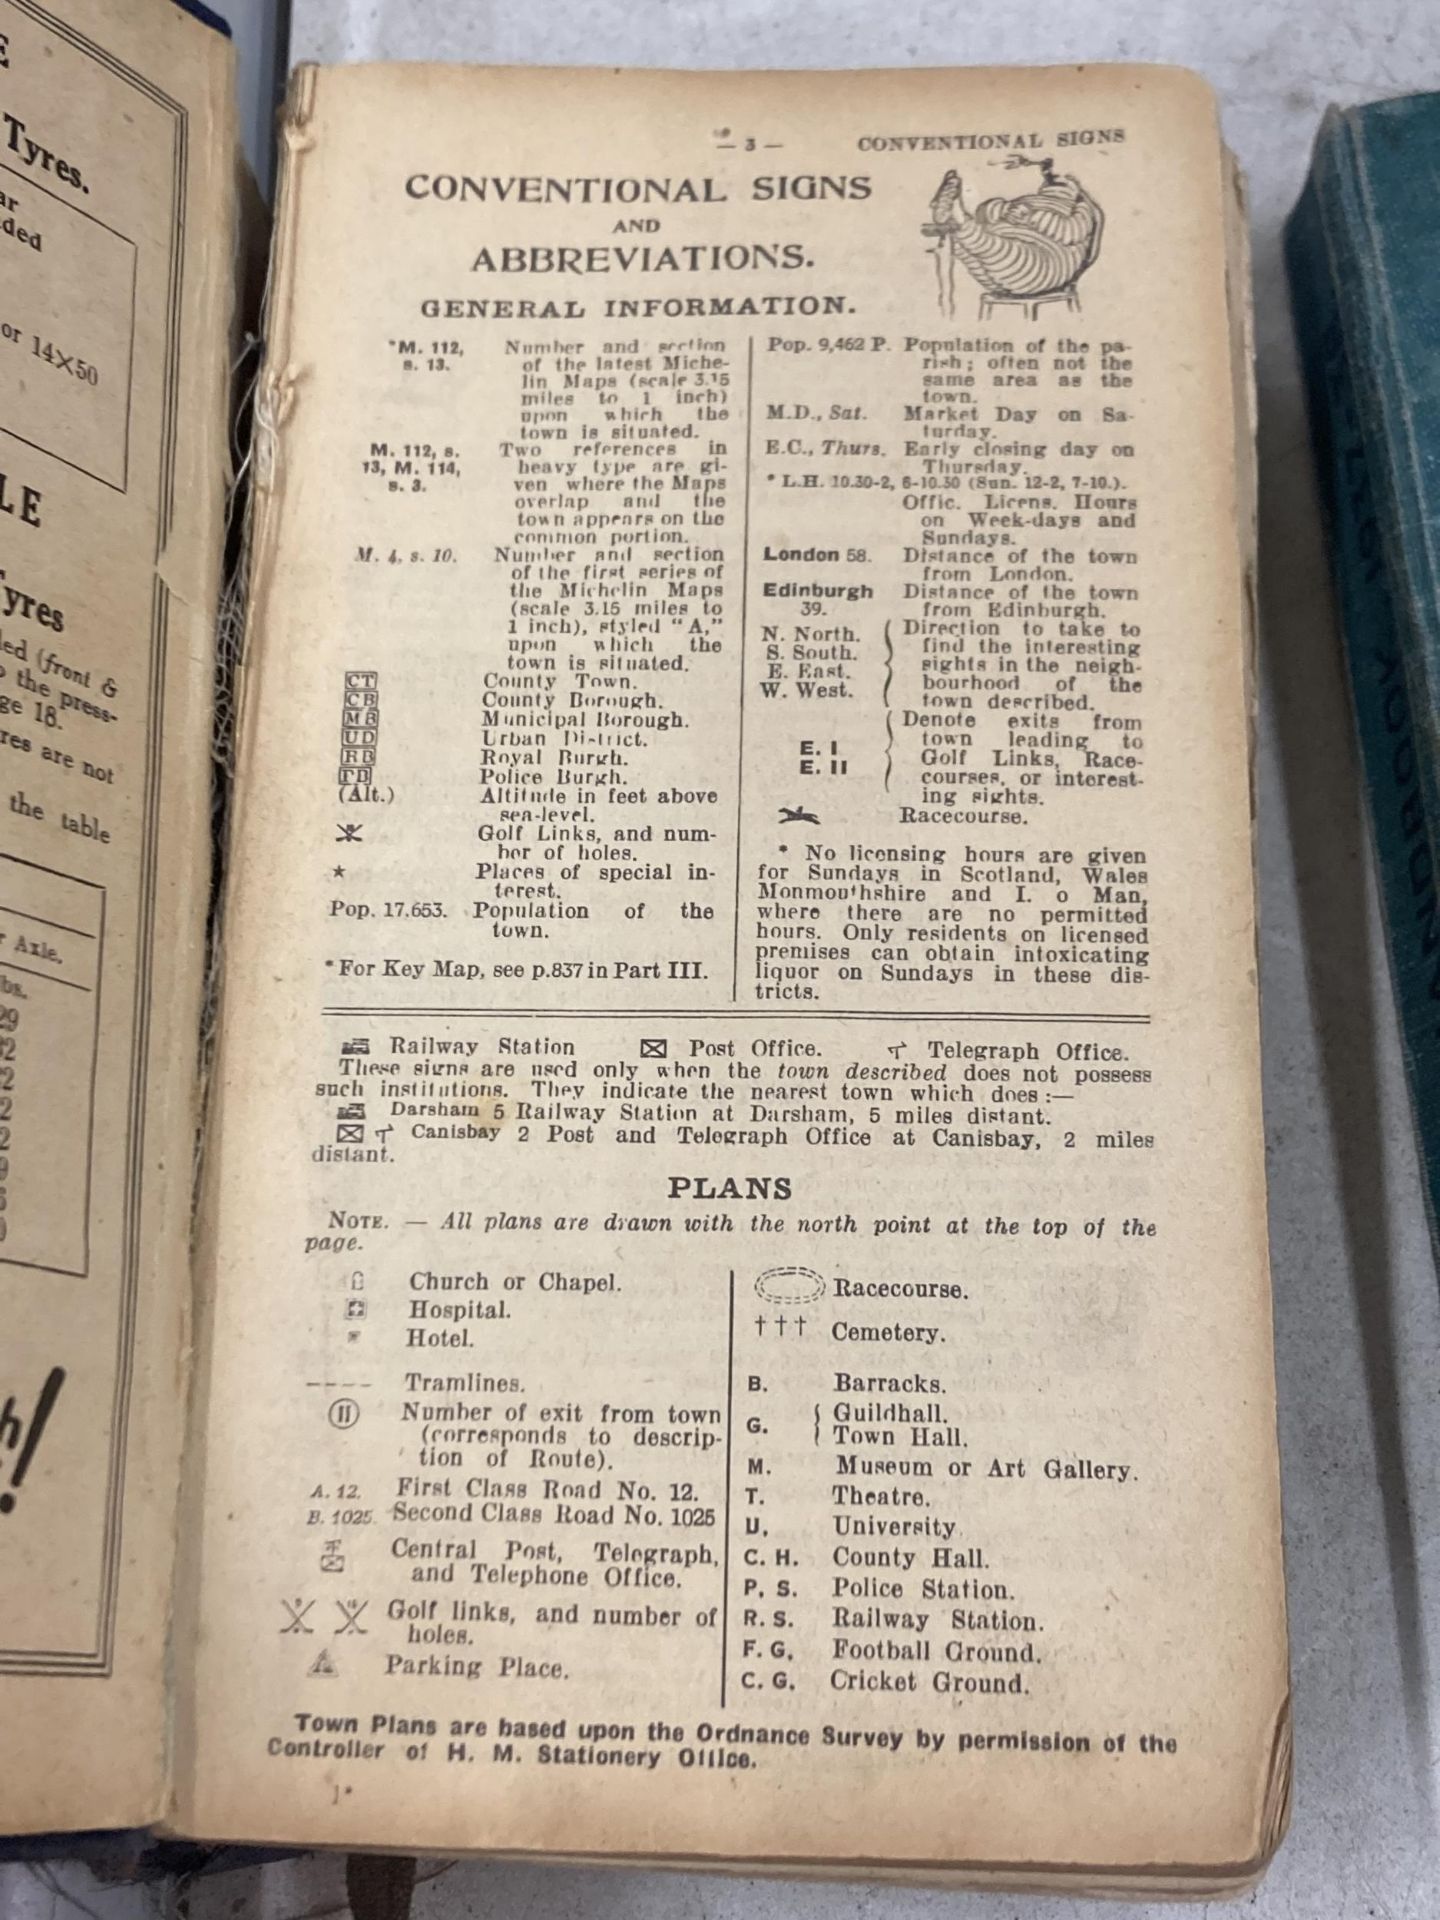 THE AA HANDBOOK 1937-38 AND A MICHELIN GUIDE 10TH EDITION 1925 - Bild 6 aus 6